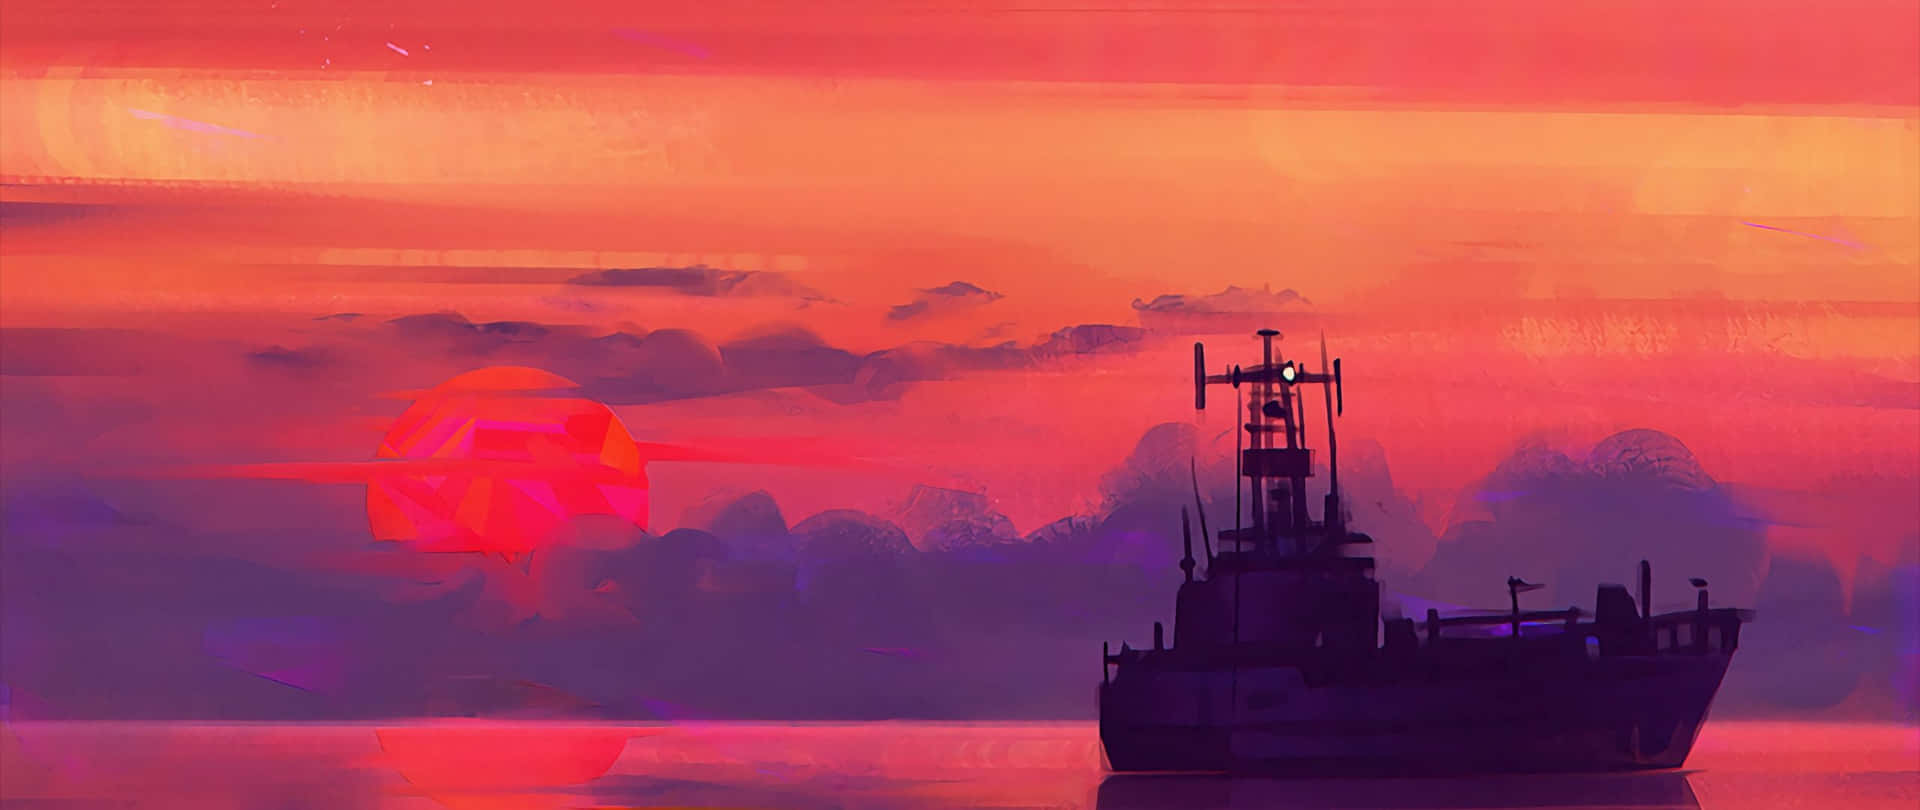 Bootwährend Des Sonnenuntergangs Kunstwerk 2560x1080 Wallpaper